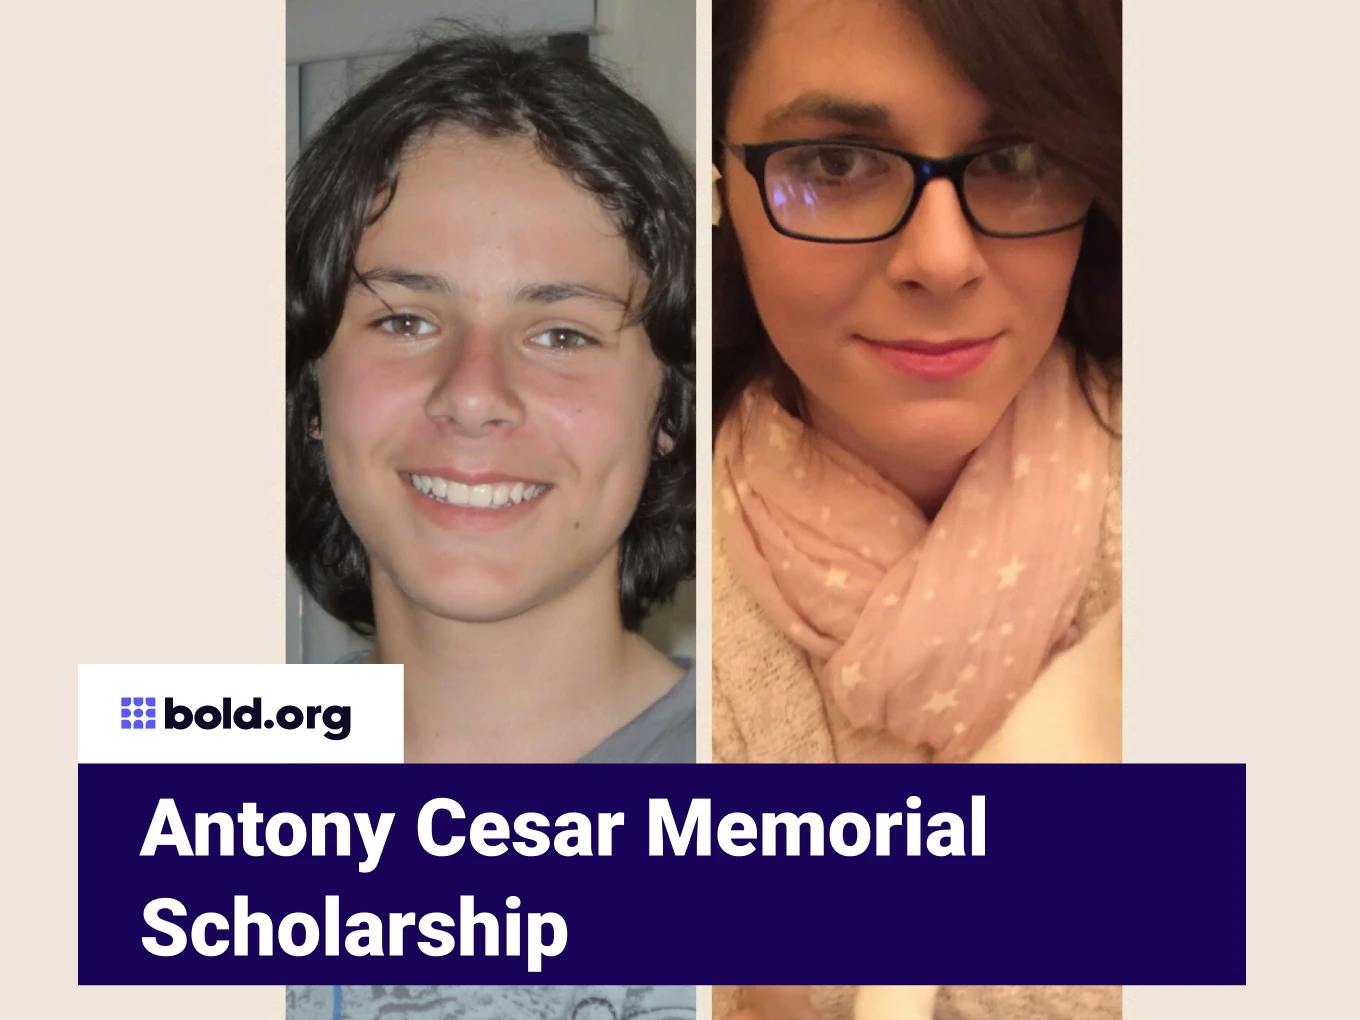 Antony Cesar Memorial Scholarship